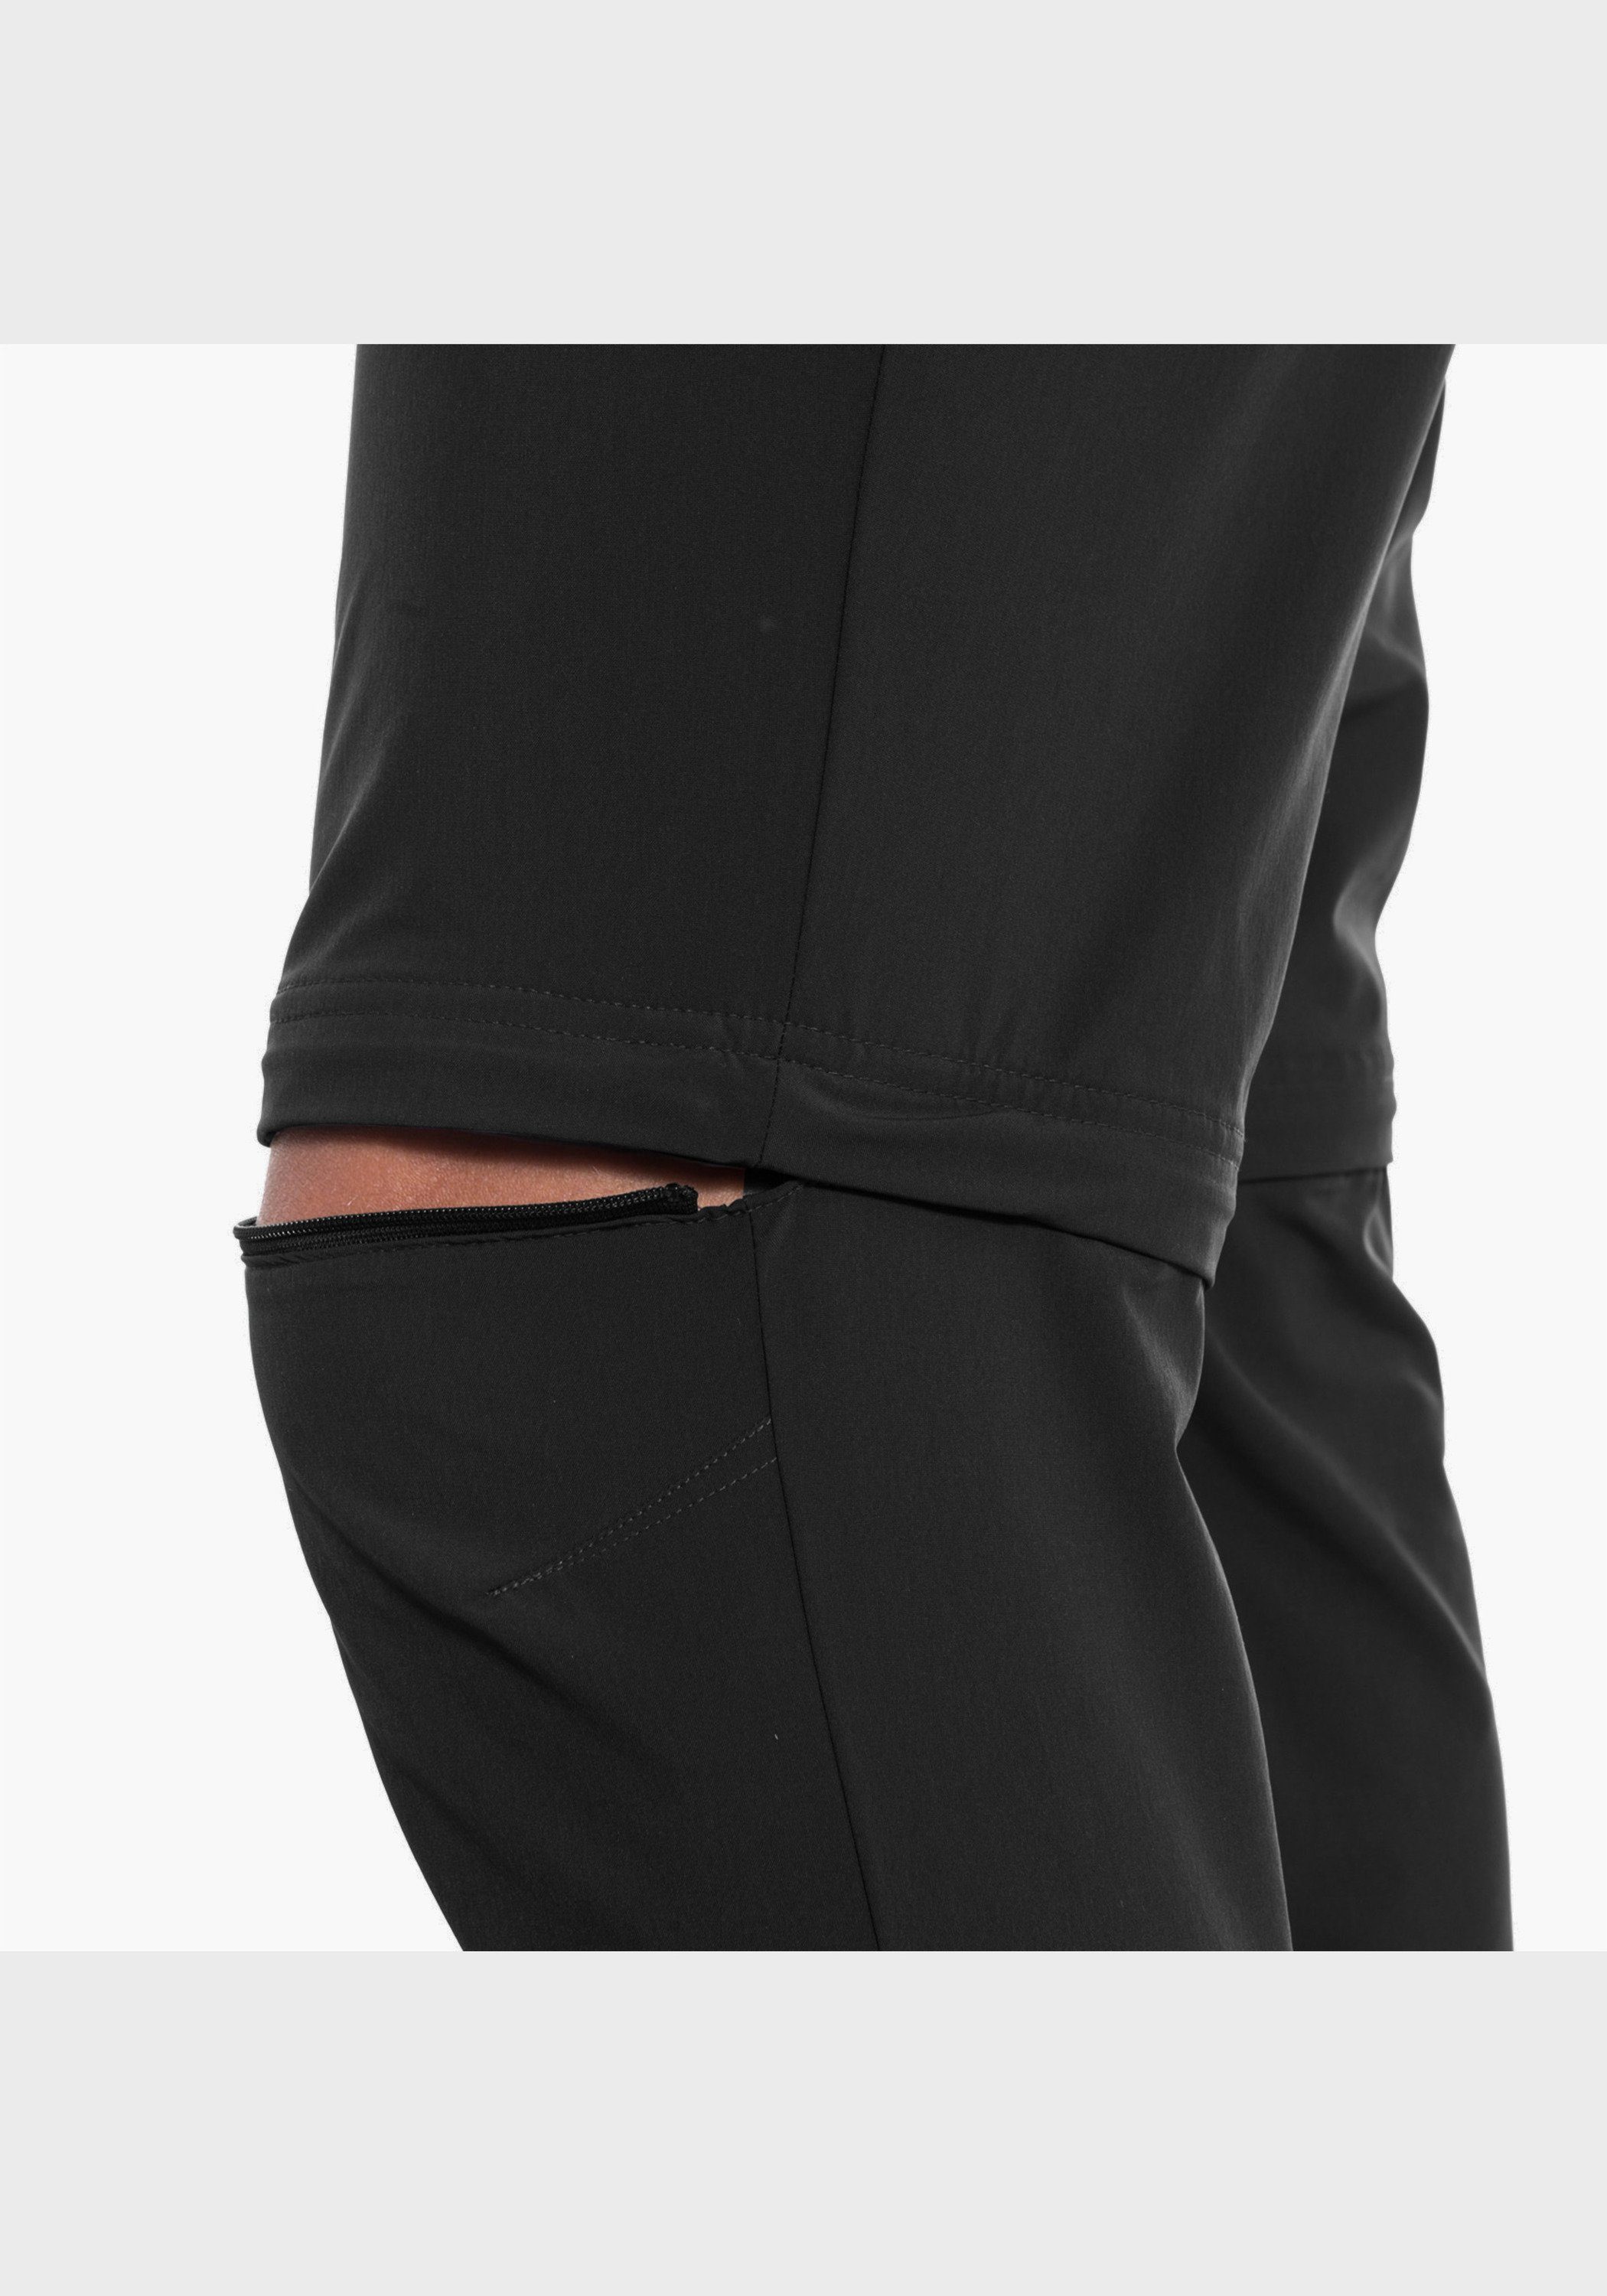 Schöffel Zip-away-Hose Pants Folkstone Zip grau Off